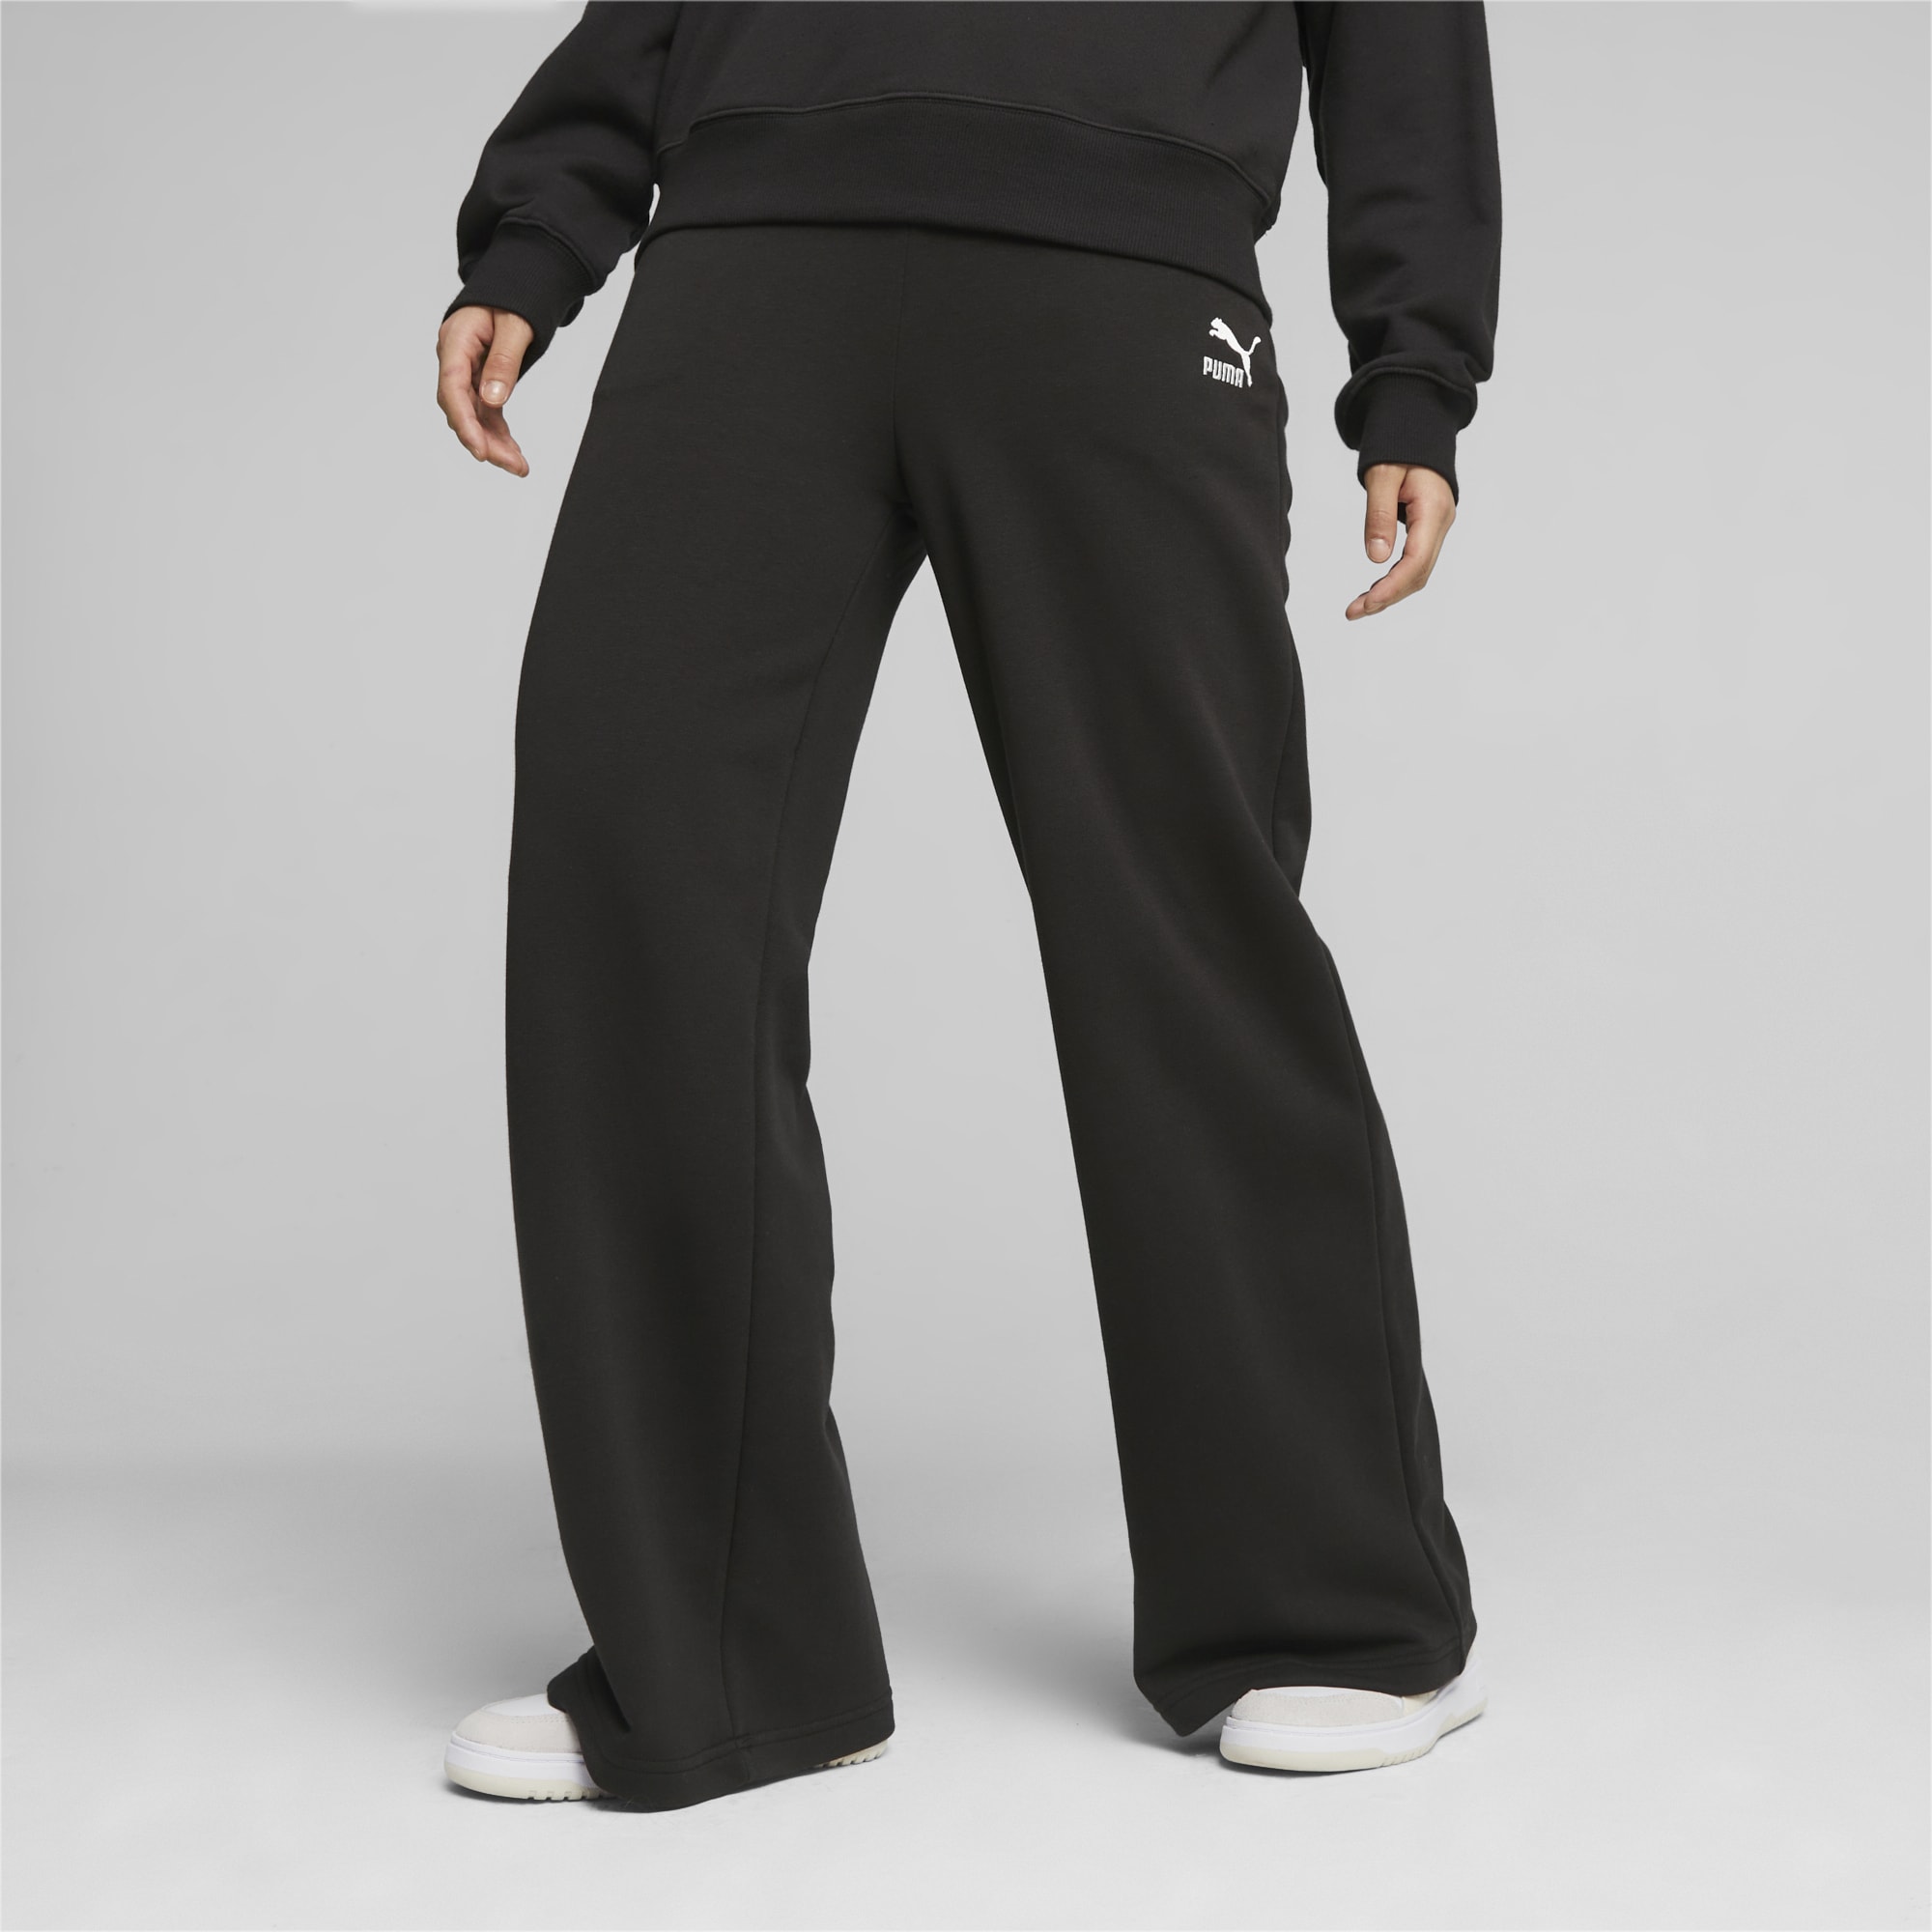 PUMA Classics Women's Relaxed Sweatpants, Black, Size XS, Clothing